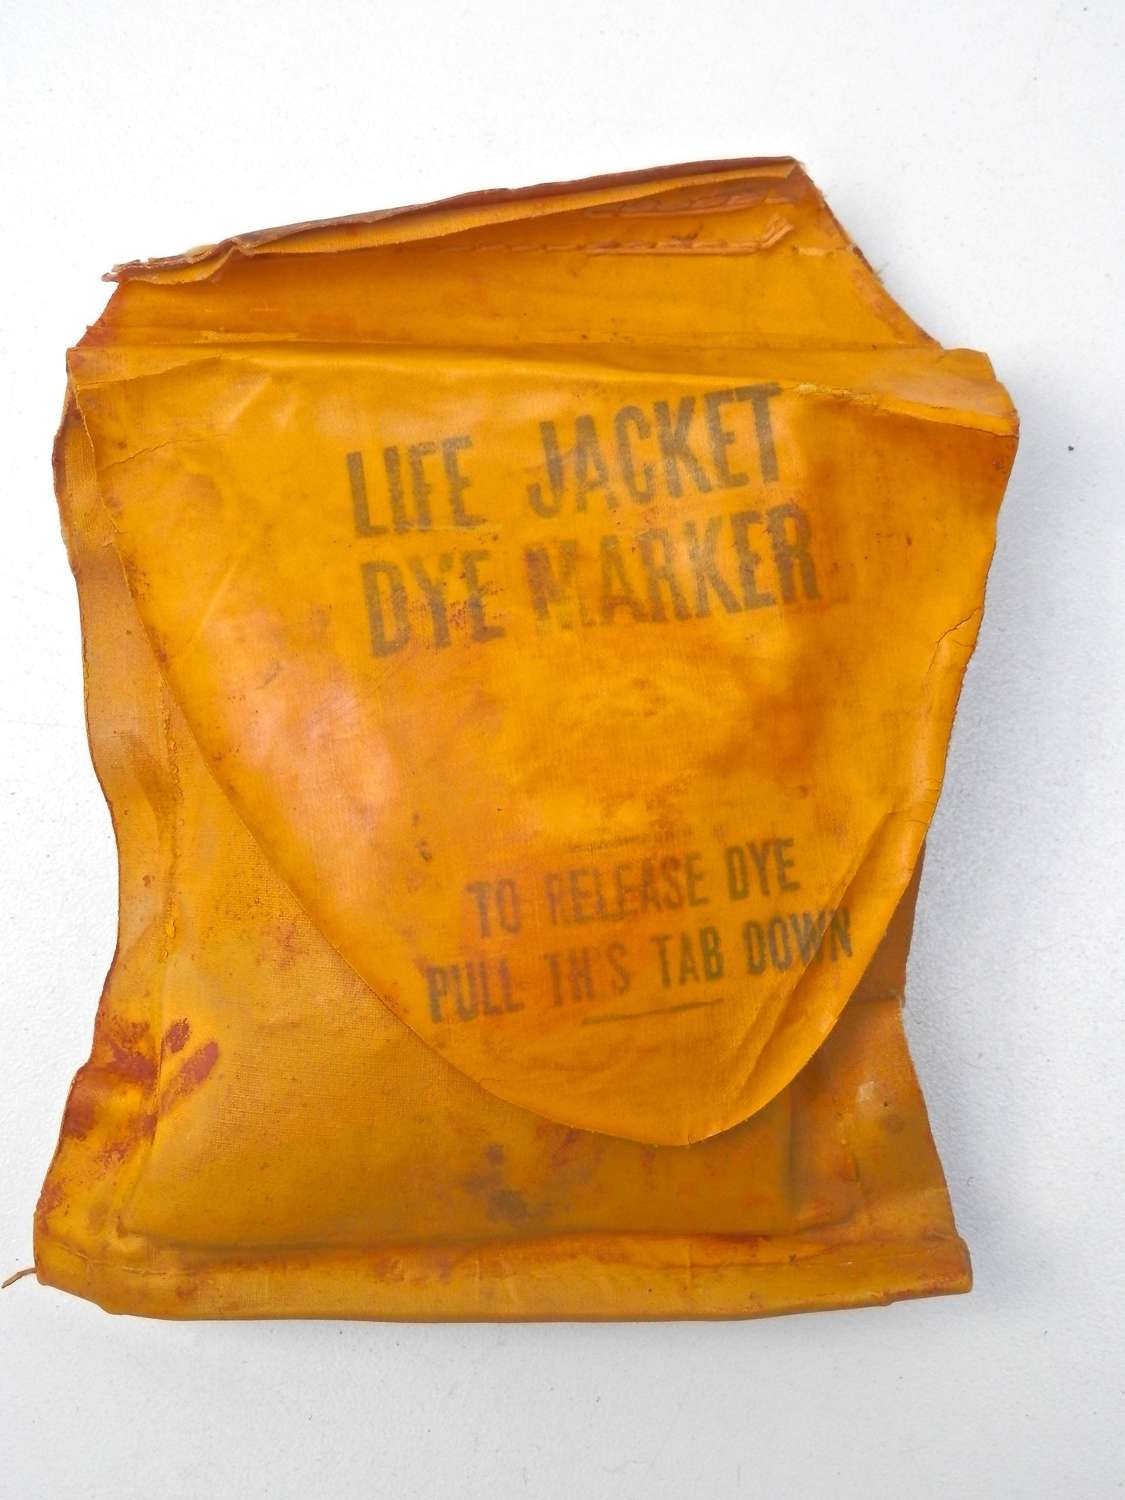 USAAF life preserver dye pack